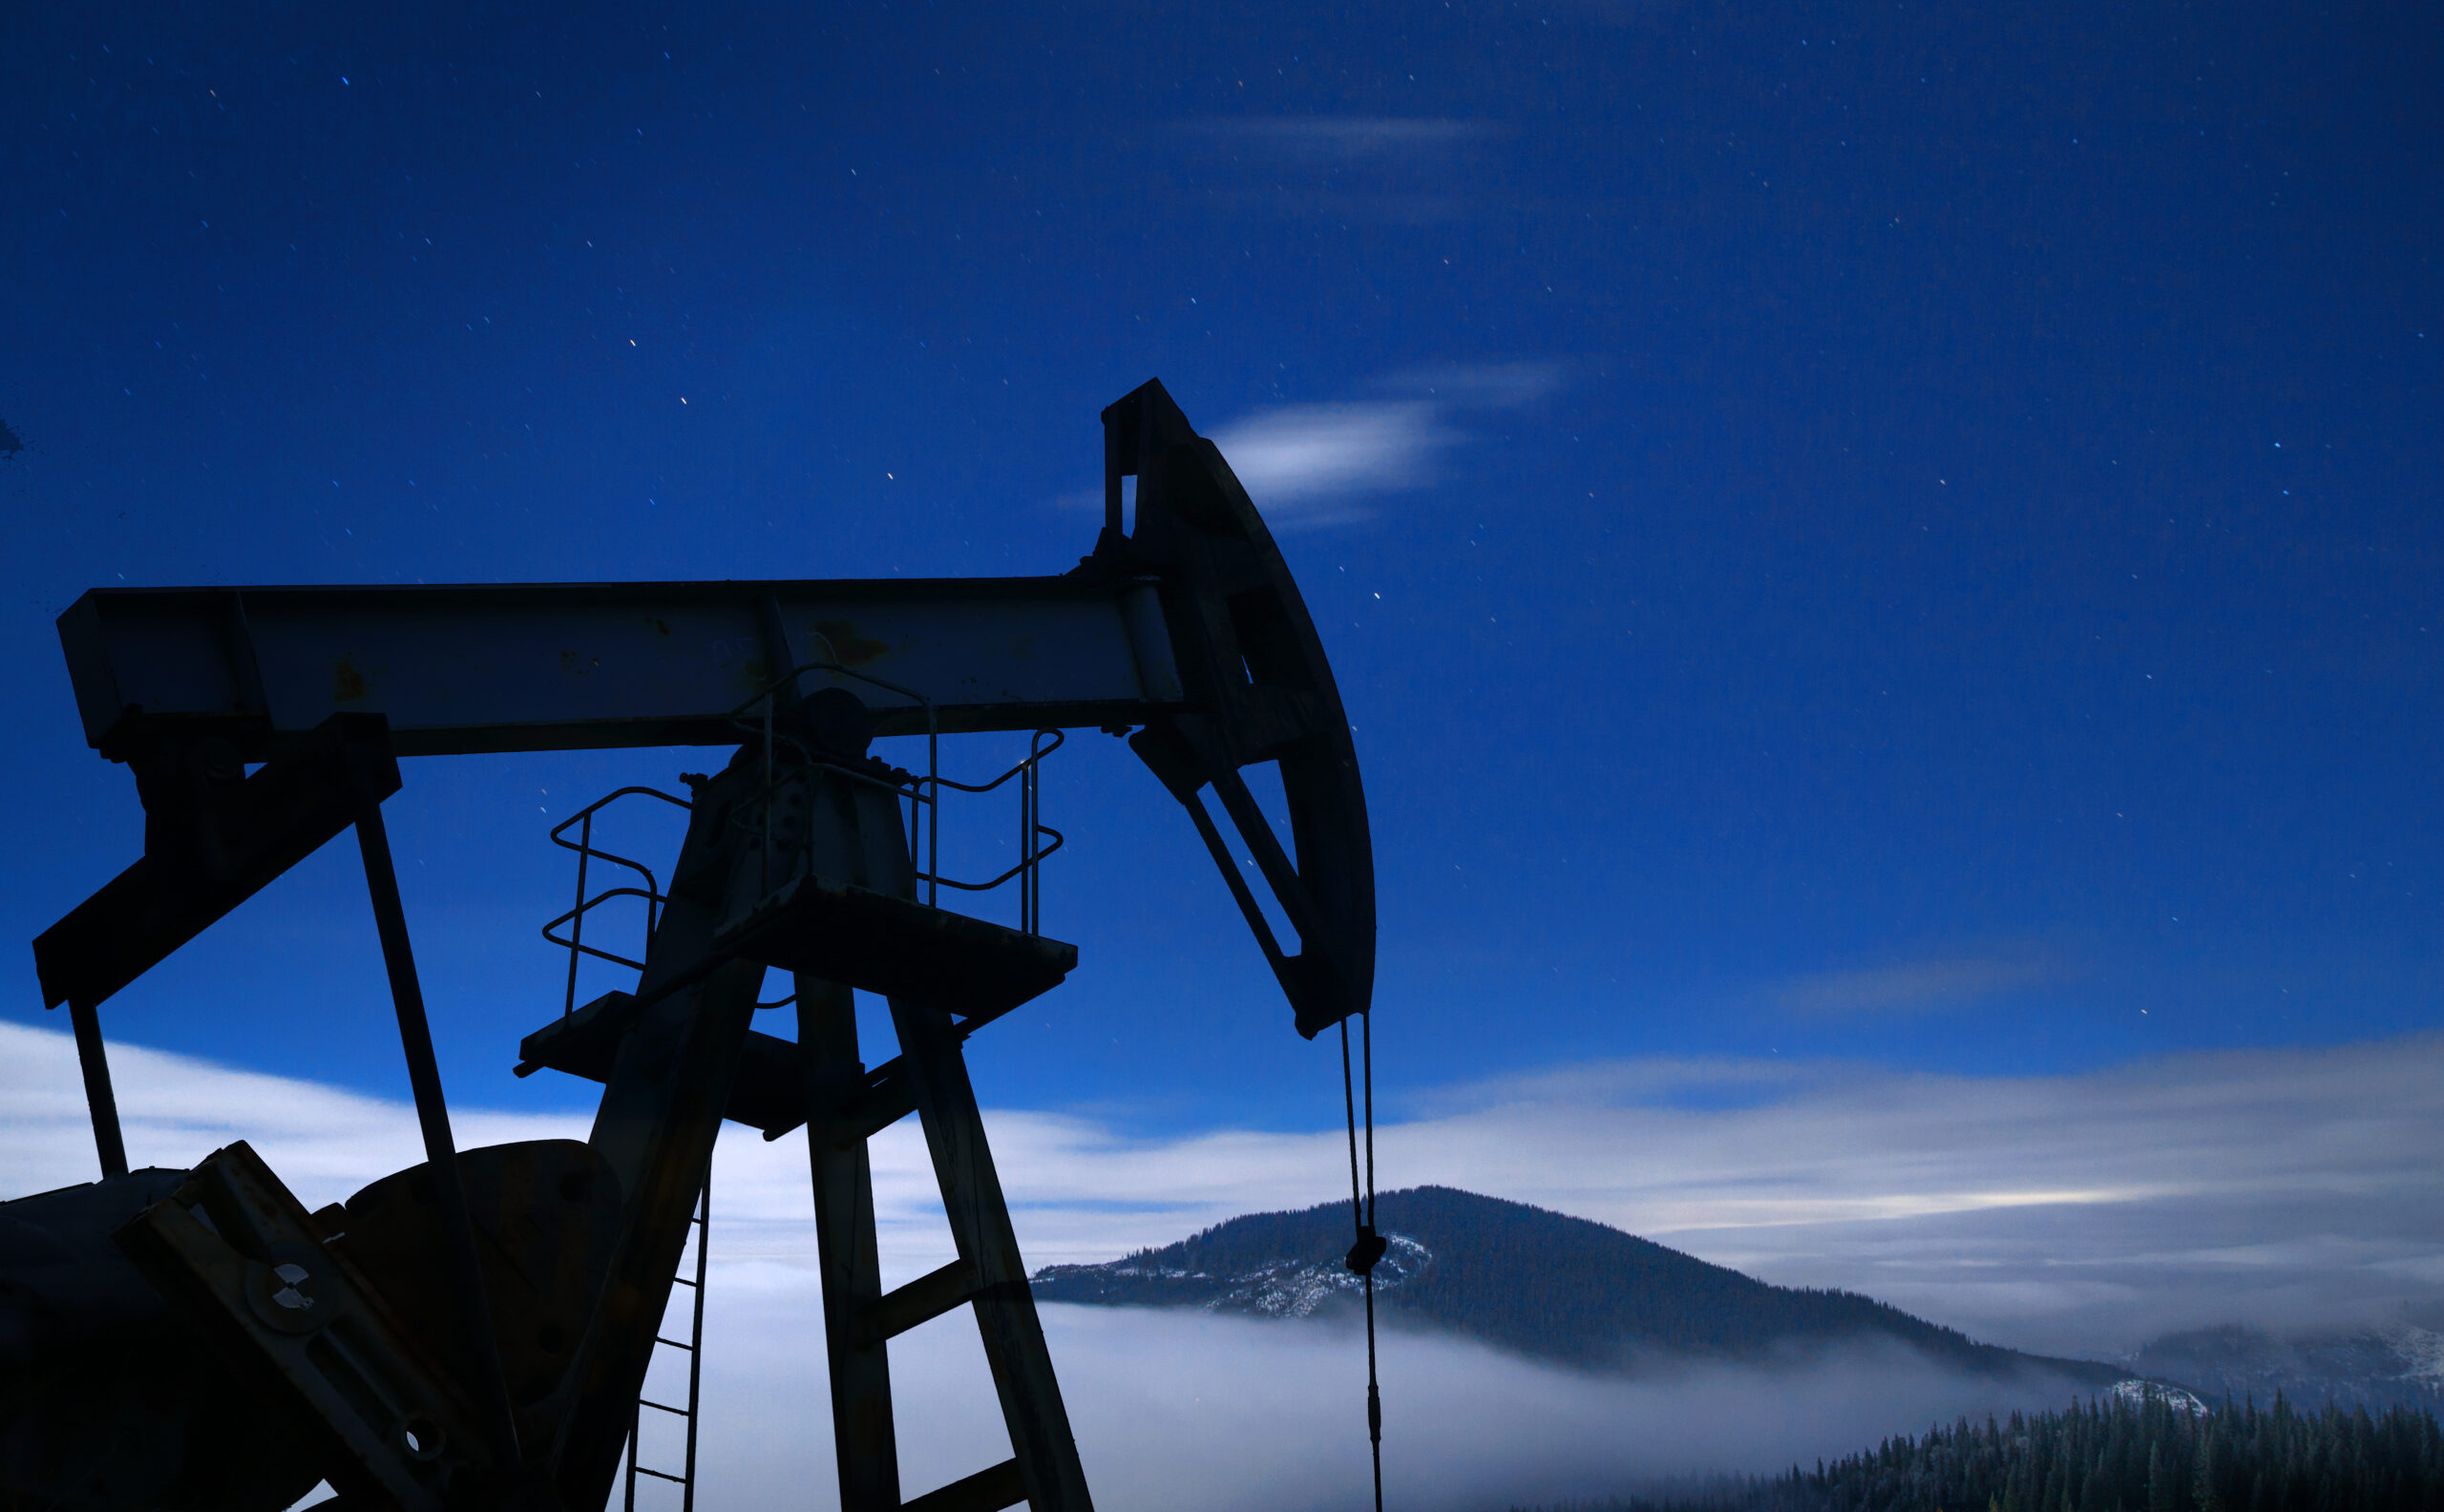 Oil pump silhouette at night. Delta Plus Energy